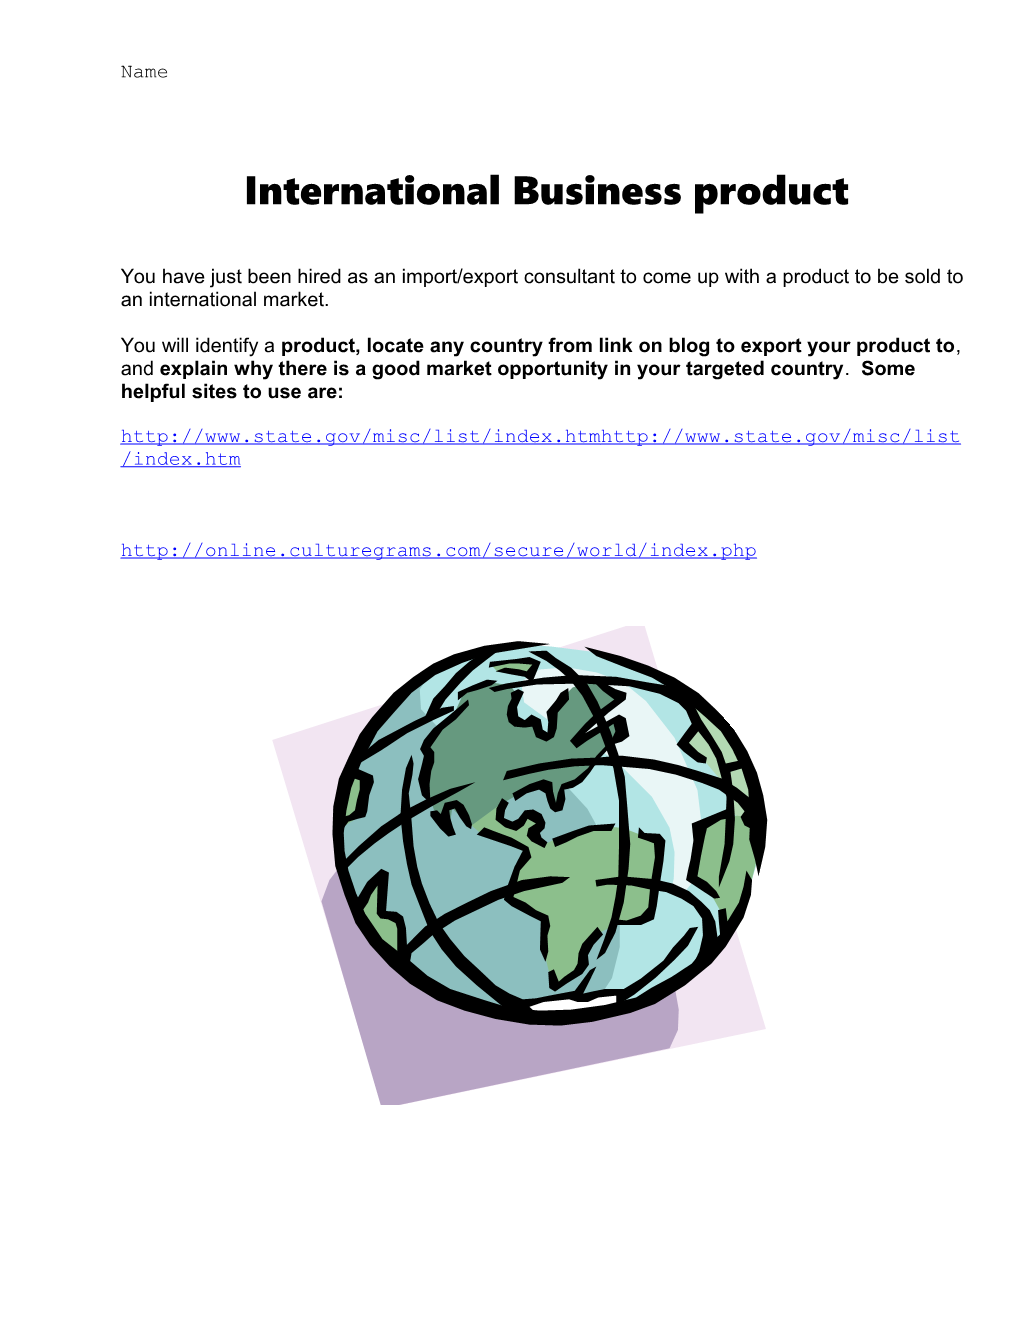 International Business Product